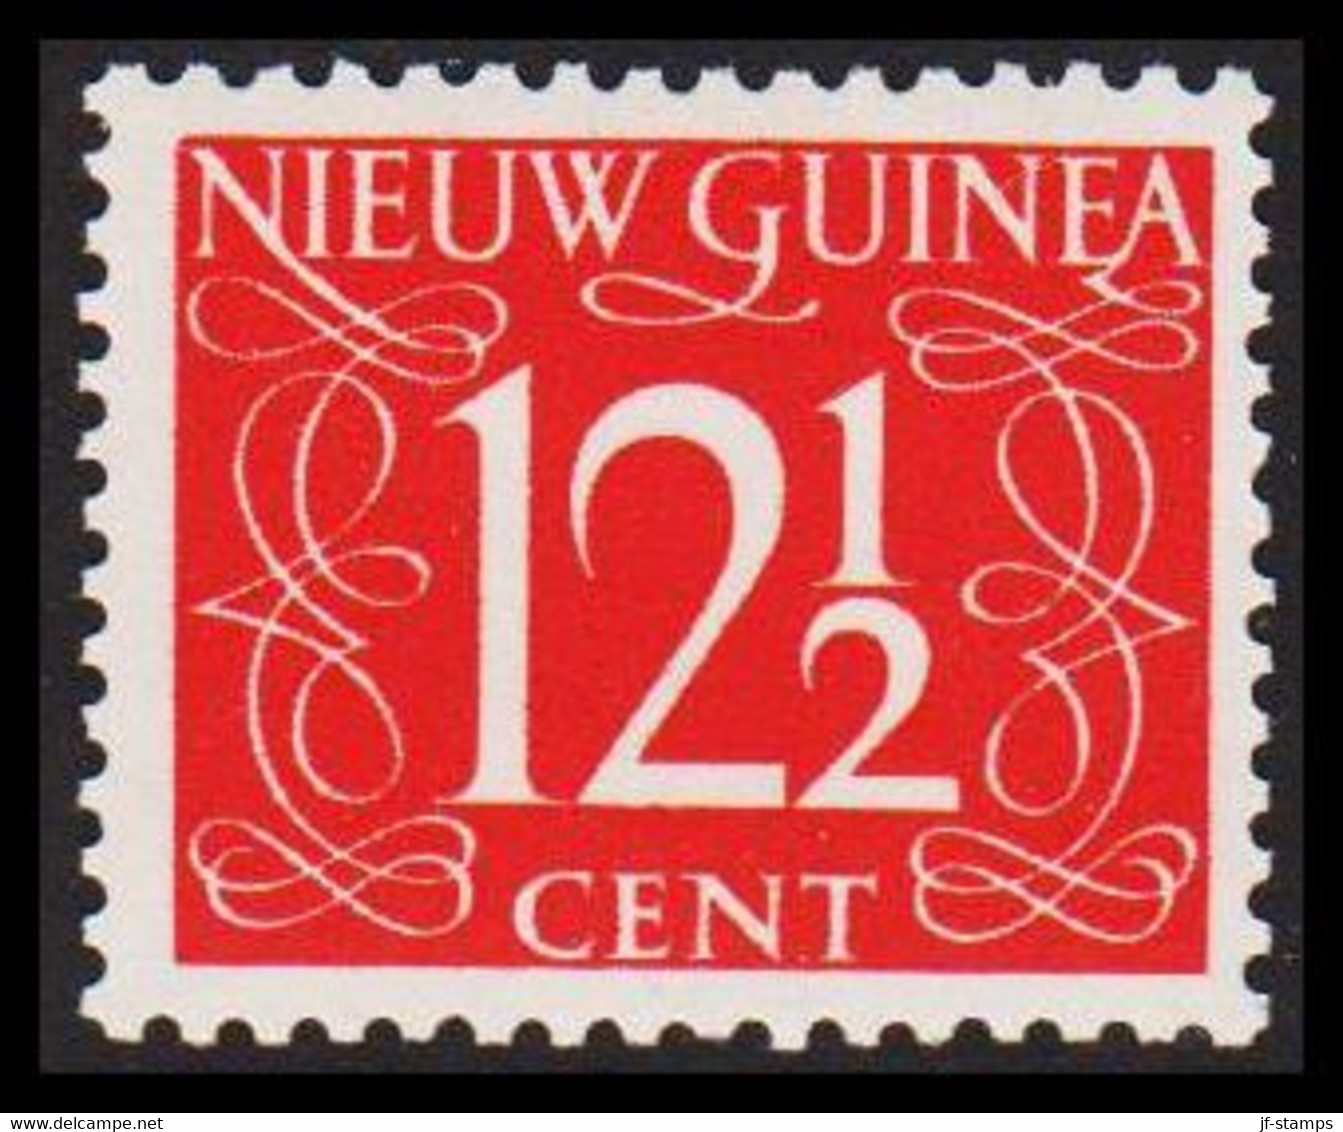 1950. NIEUW GUINEA. Nummerals- Type 12½ CENT Hinged.  - JF529322 - Netherlands New Guinea